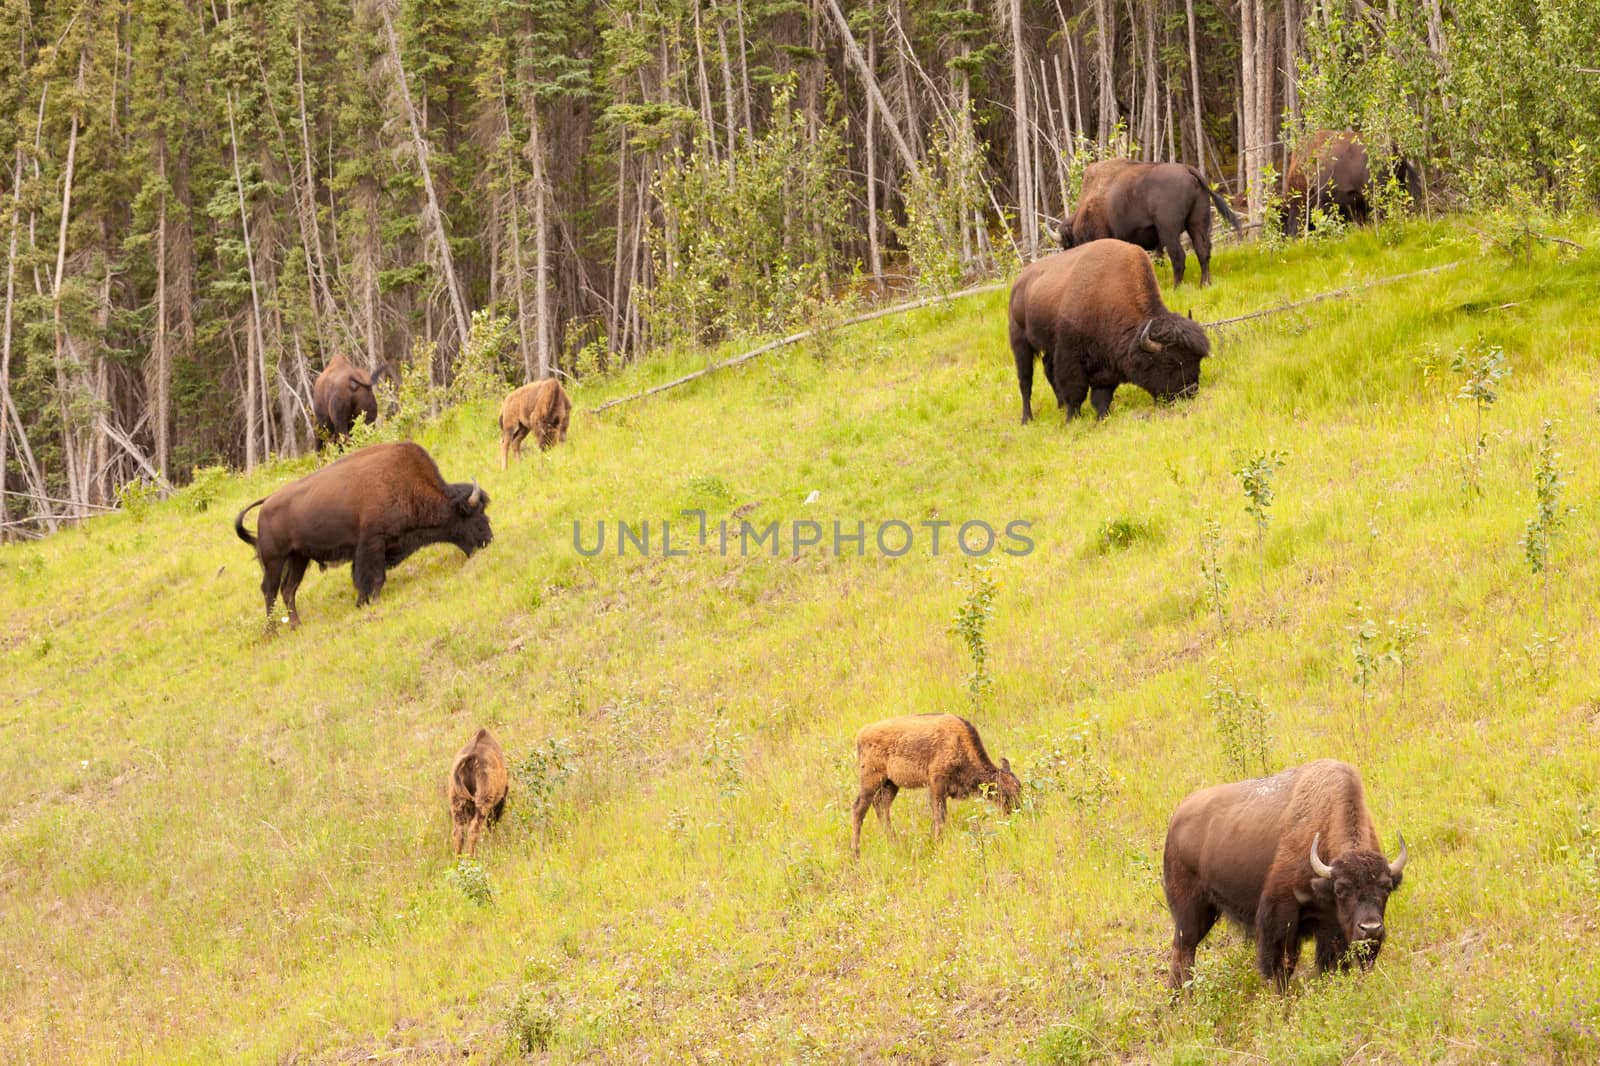 Herd of wood buffalo or wood bison, Bison bison athabascae, grazing on pasture alongside woodland